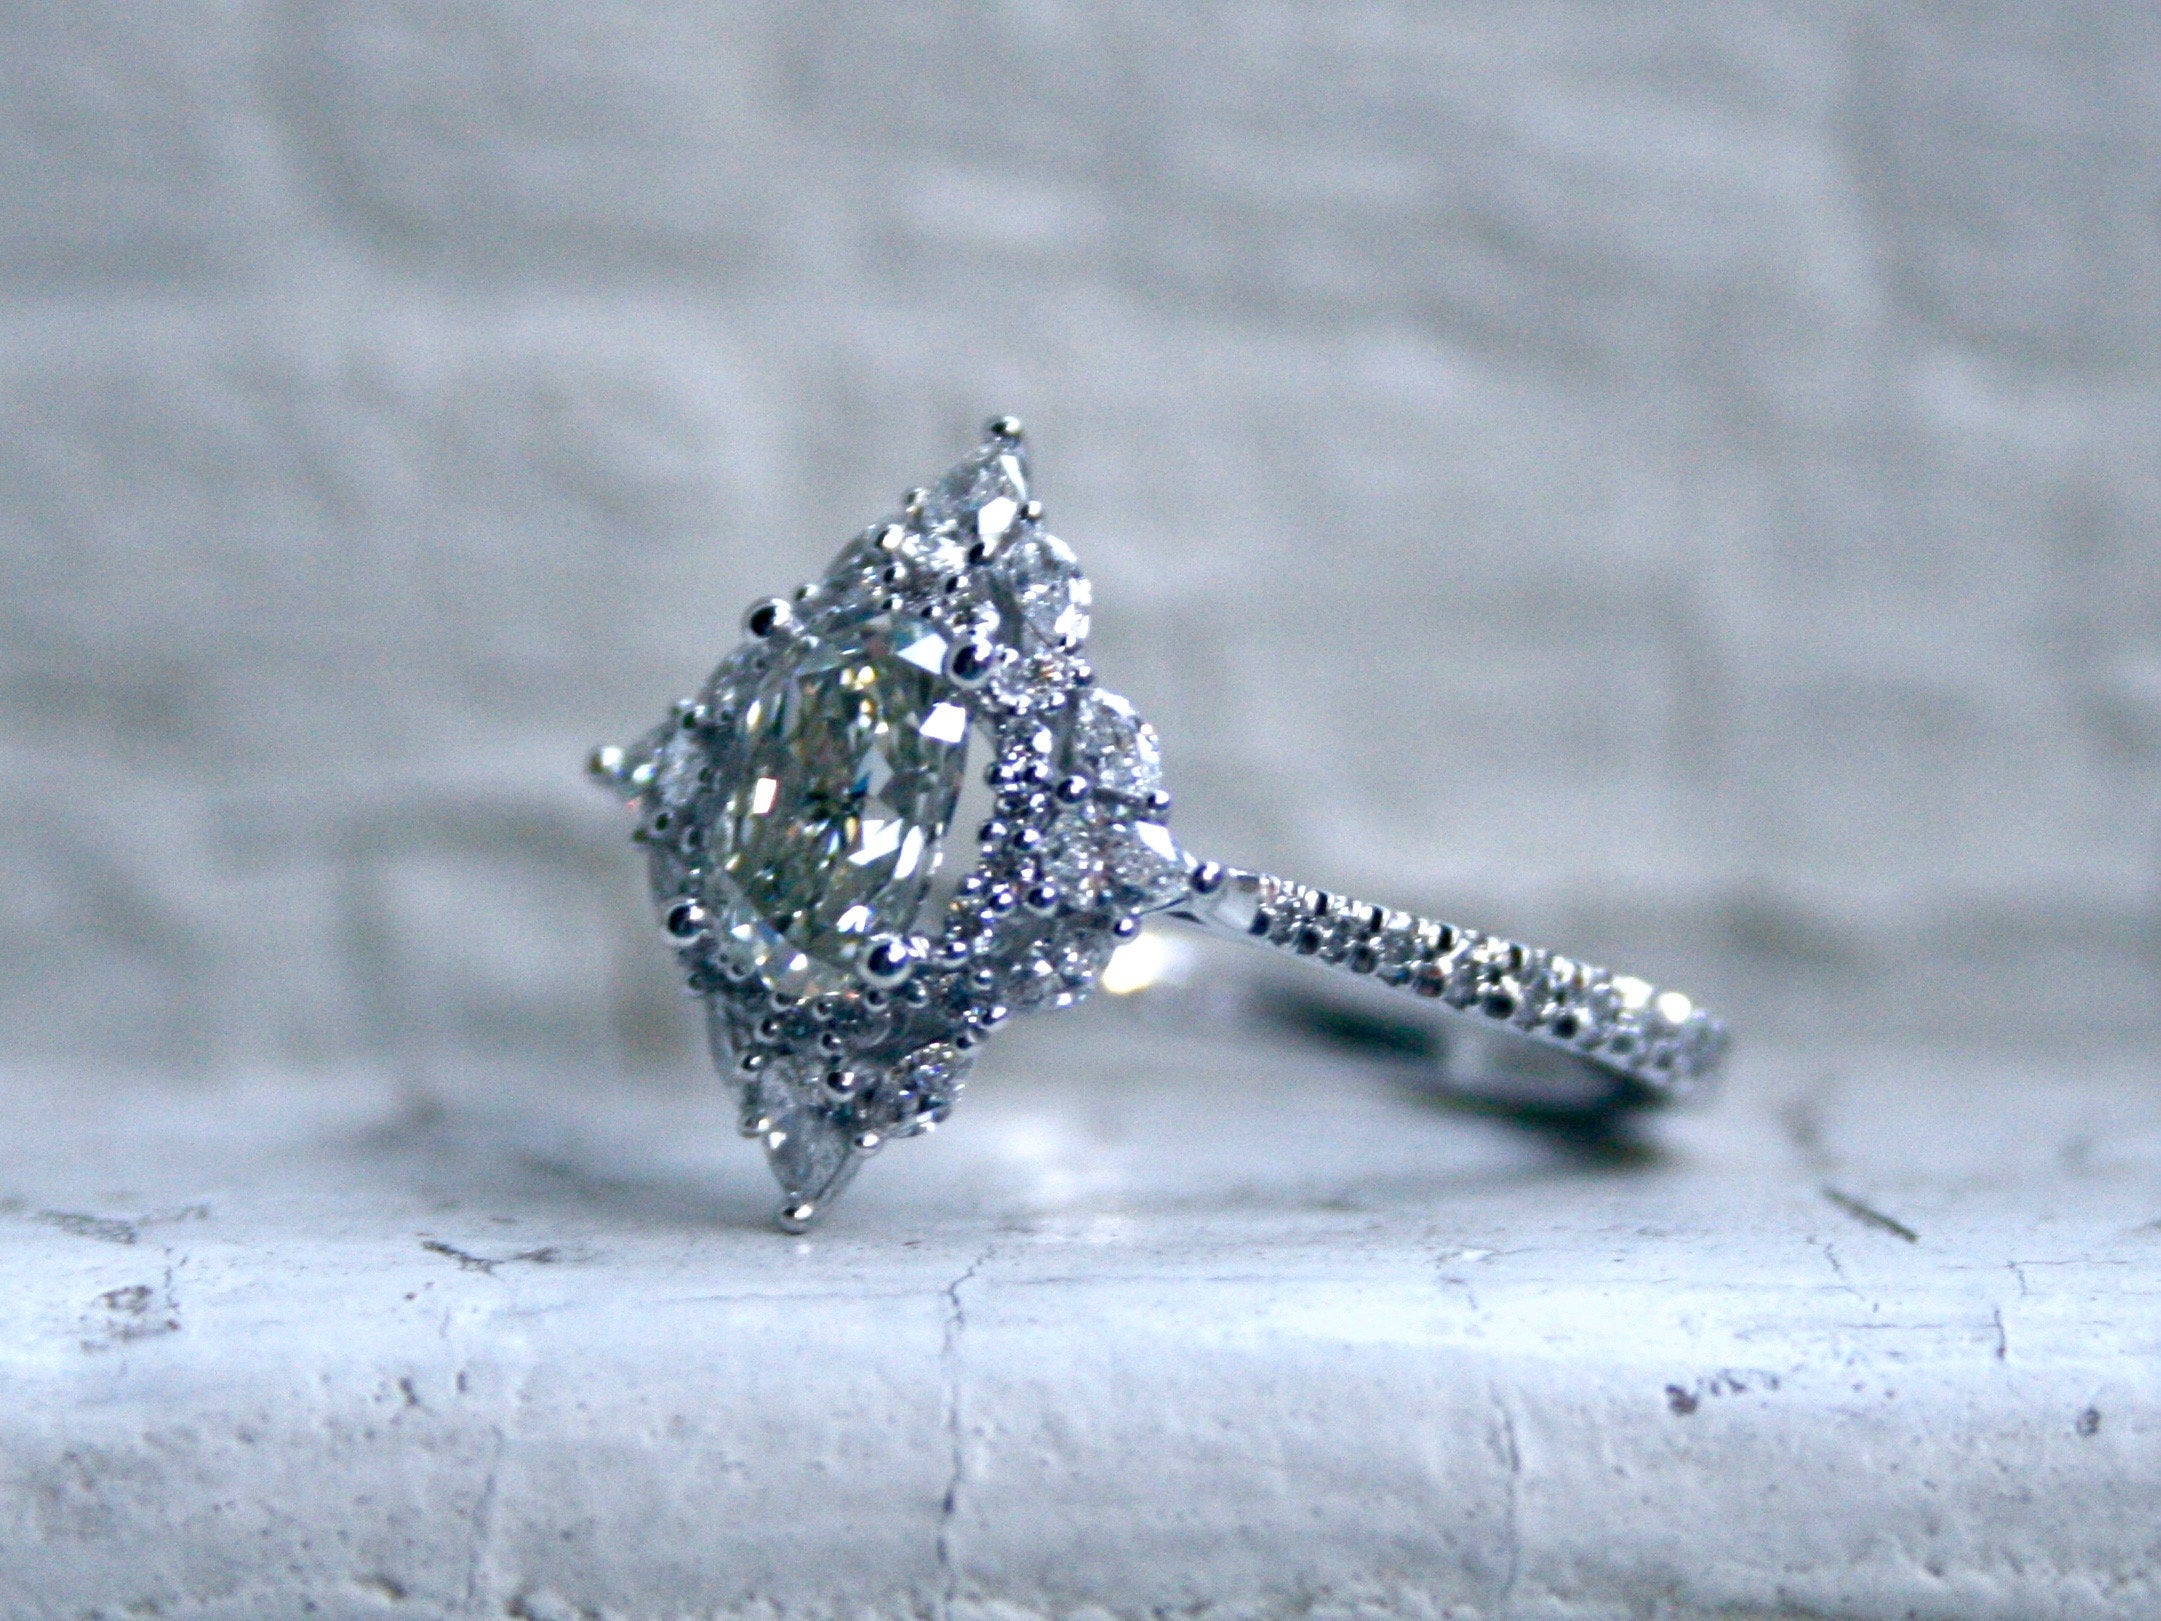 Stunning 14K White Gold Halo Oval Diamond Cluster Ring Engagement Ring Set - 1.75ct.